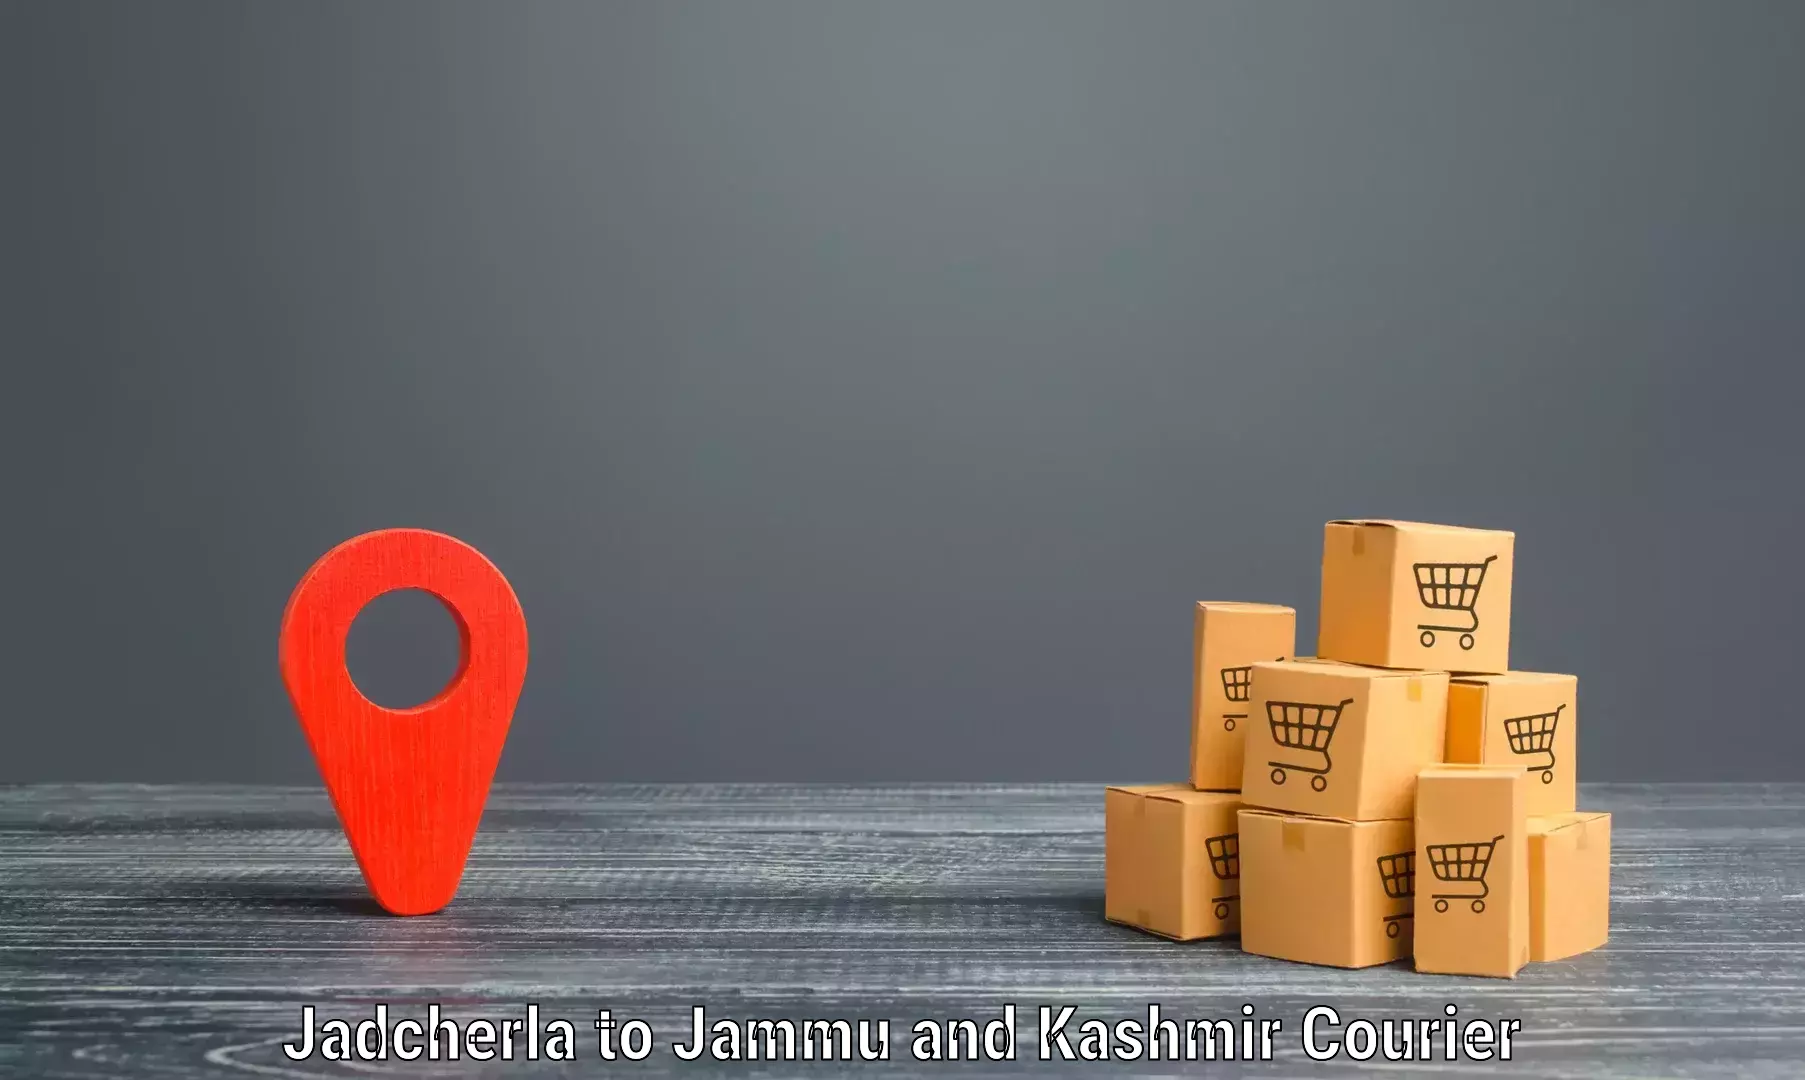 Reliable delivery network Jadcherla to Jammu